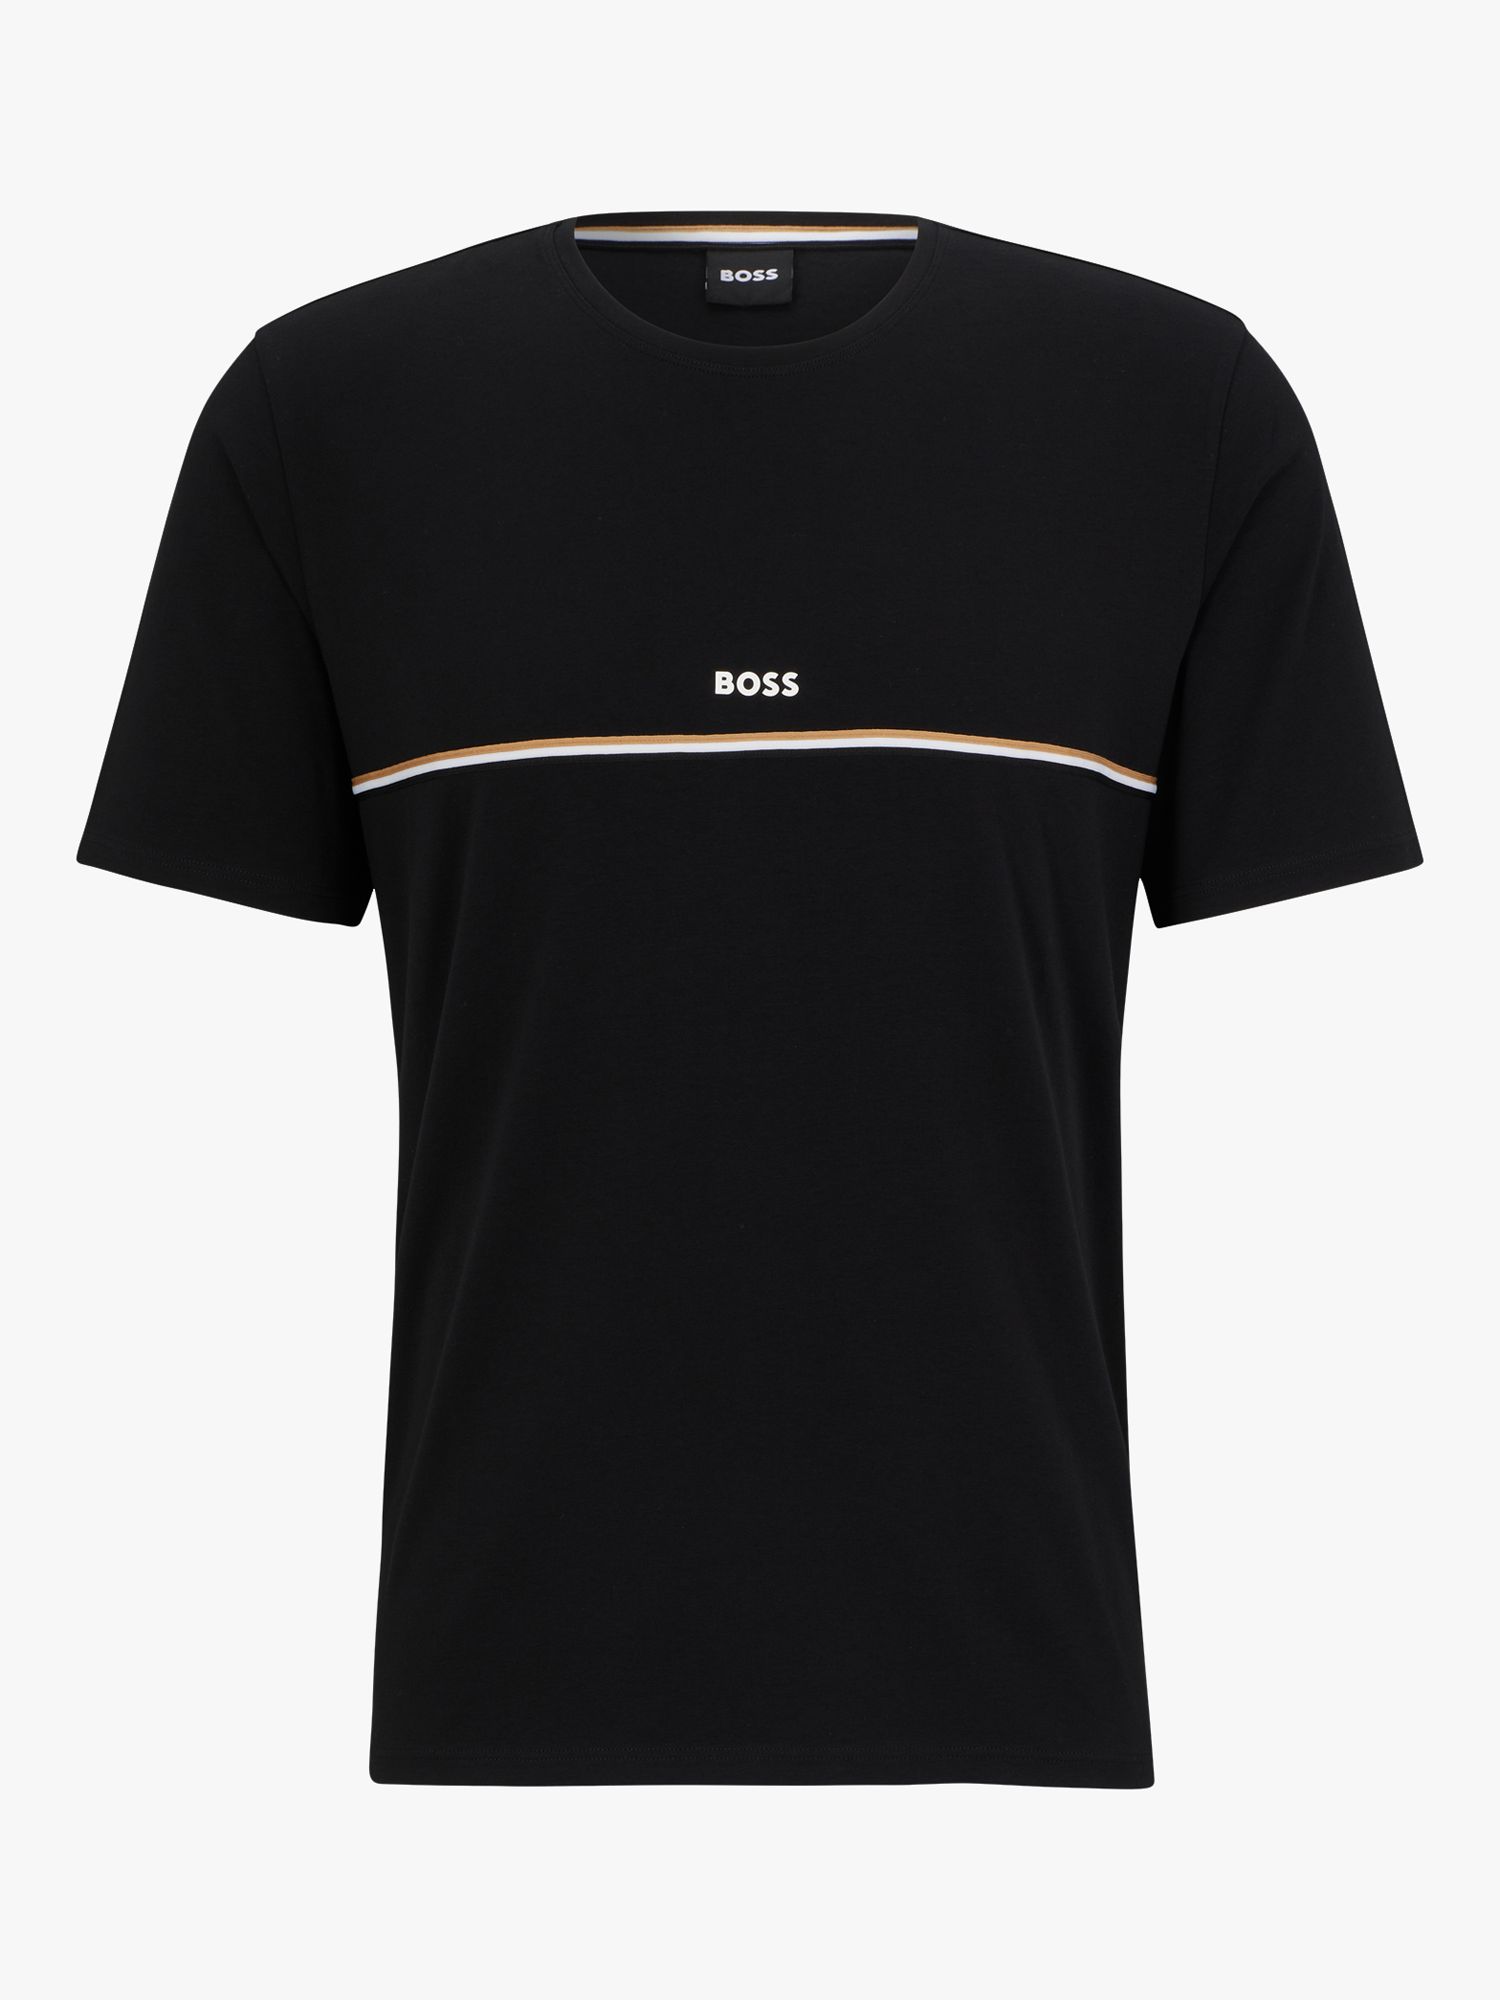 BOSS Unique Corporate Stripe T-Shirt, Black at John Lewis & Partners